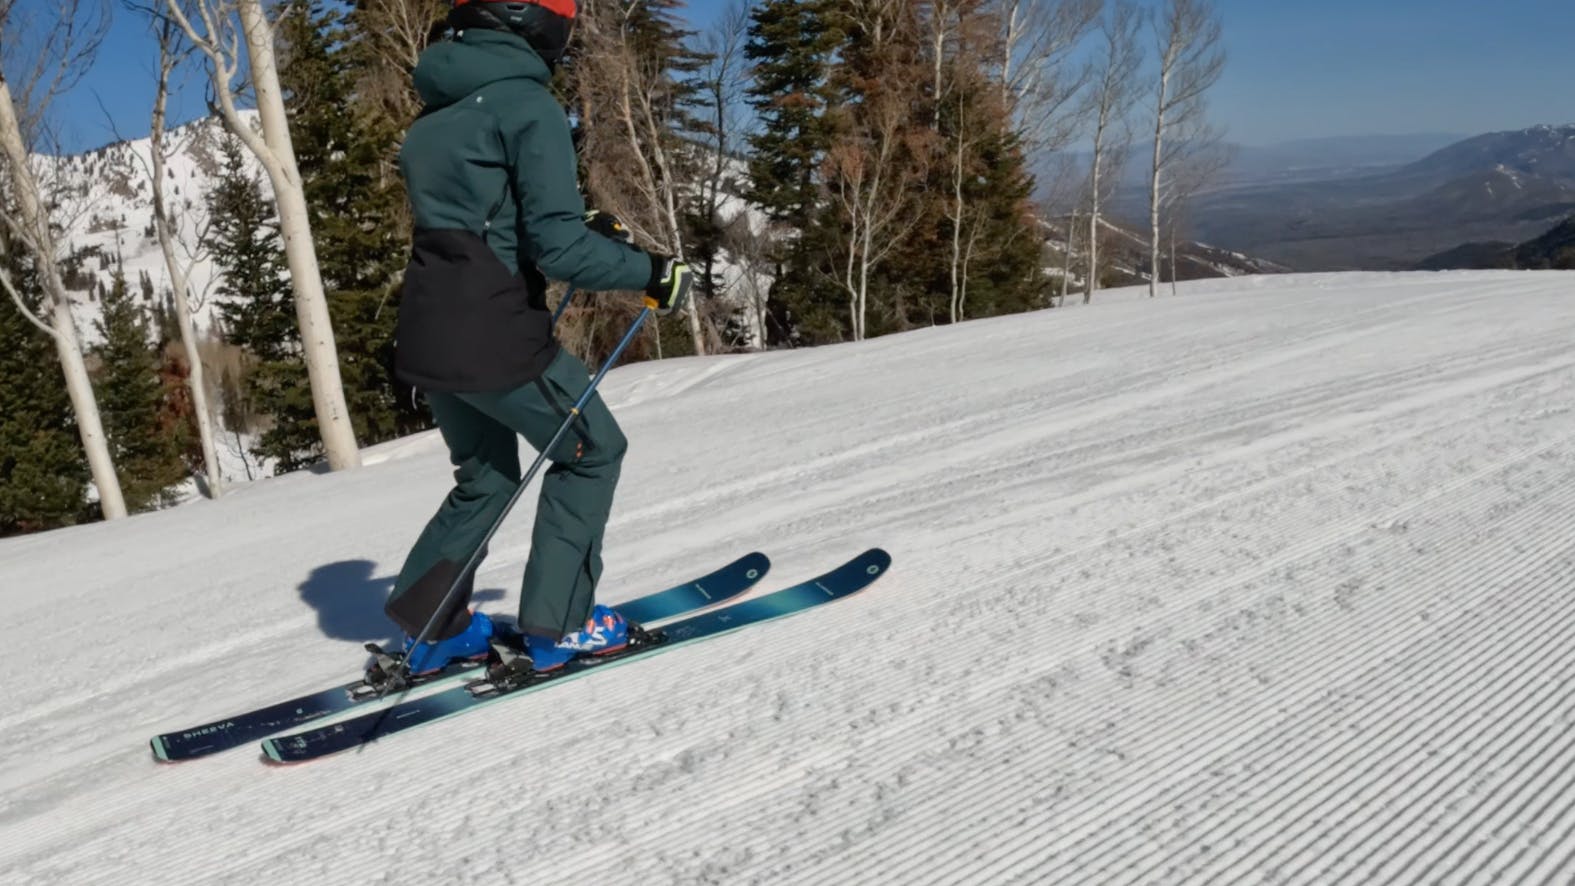 A skier on the 2023 Blizzard Sheeva 9 Skis.